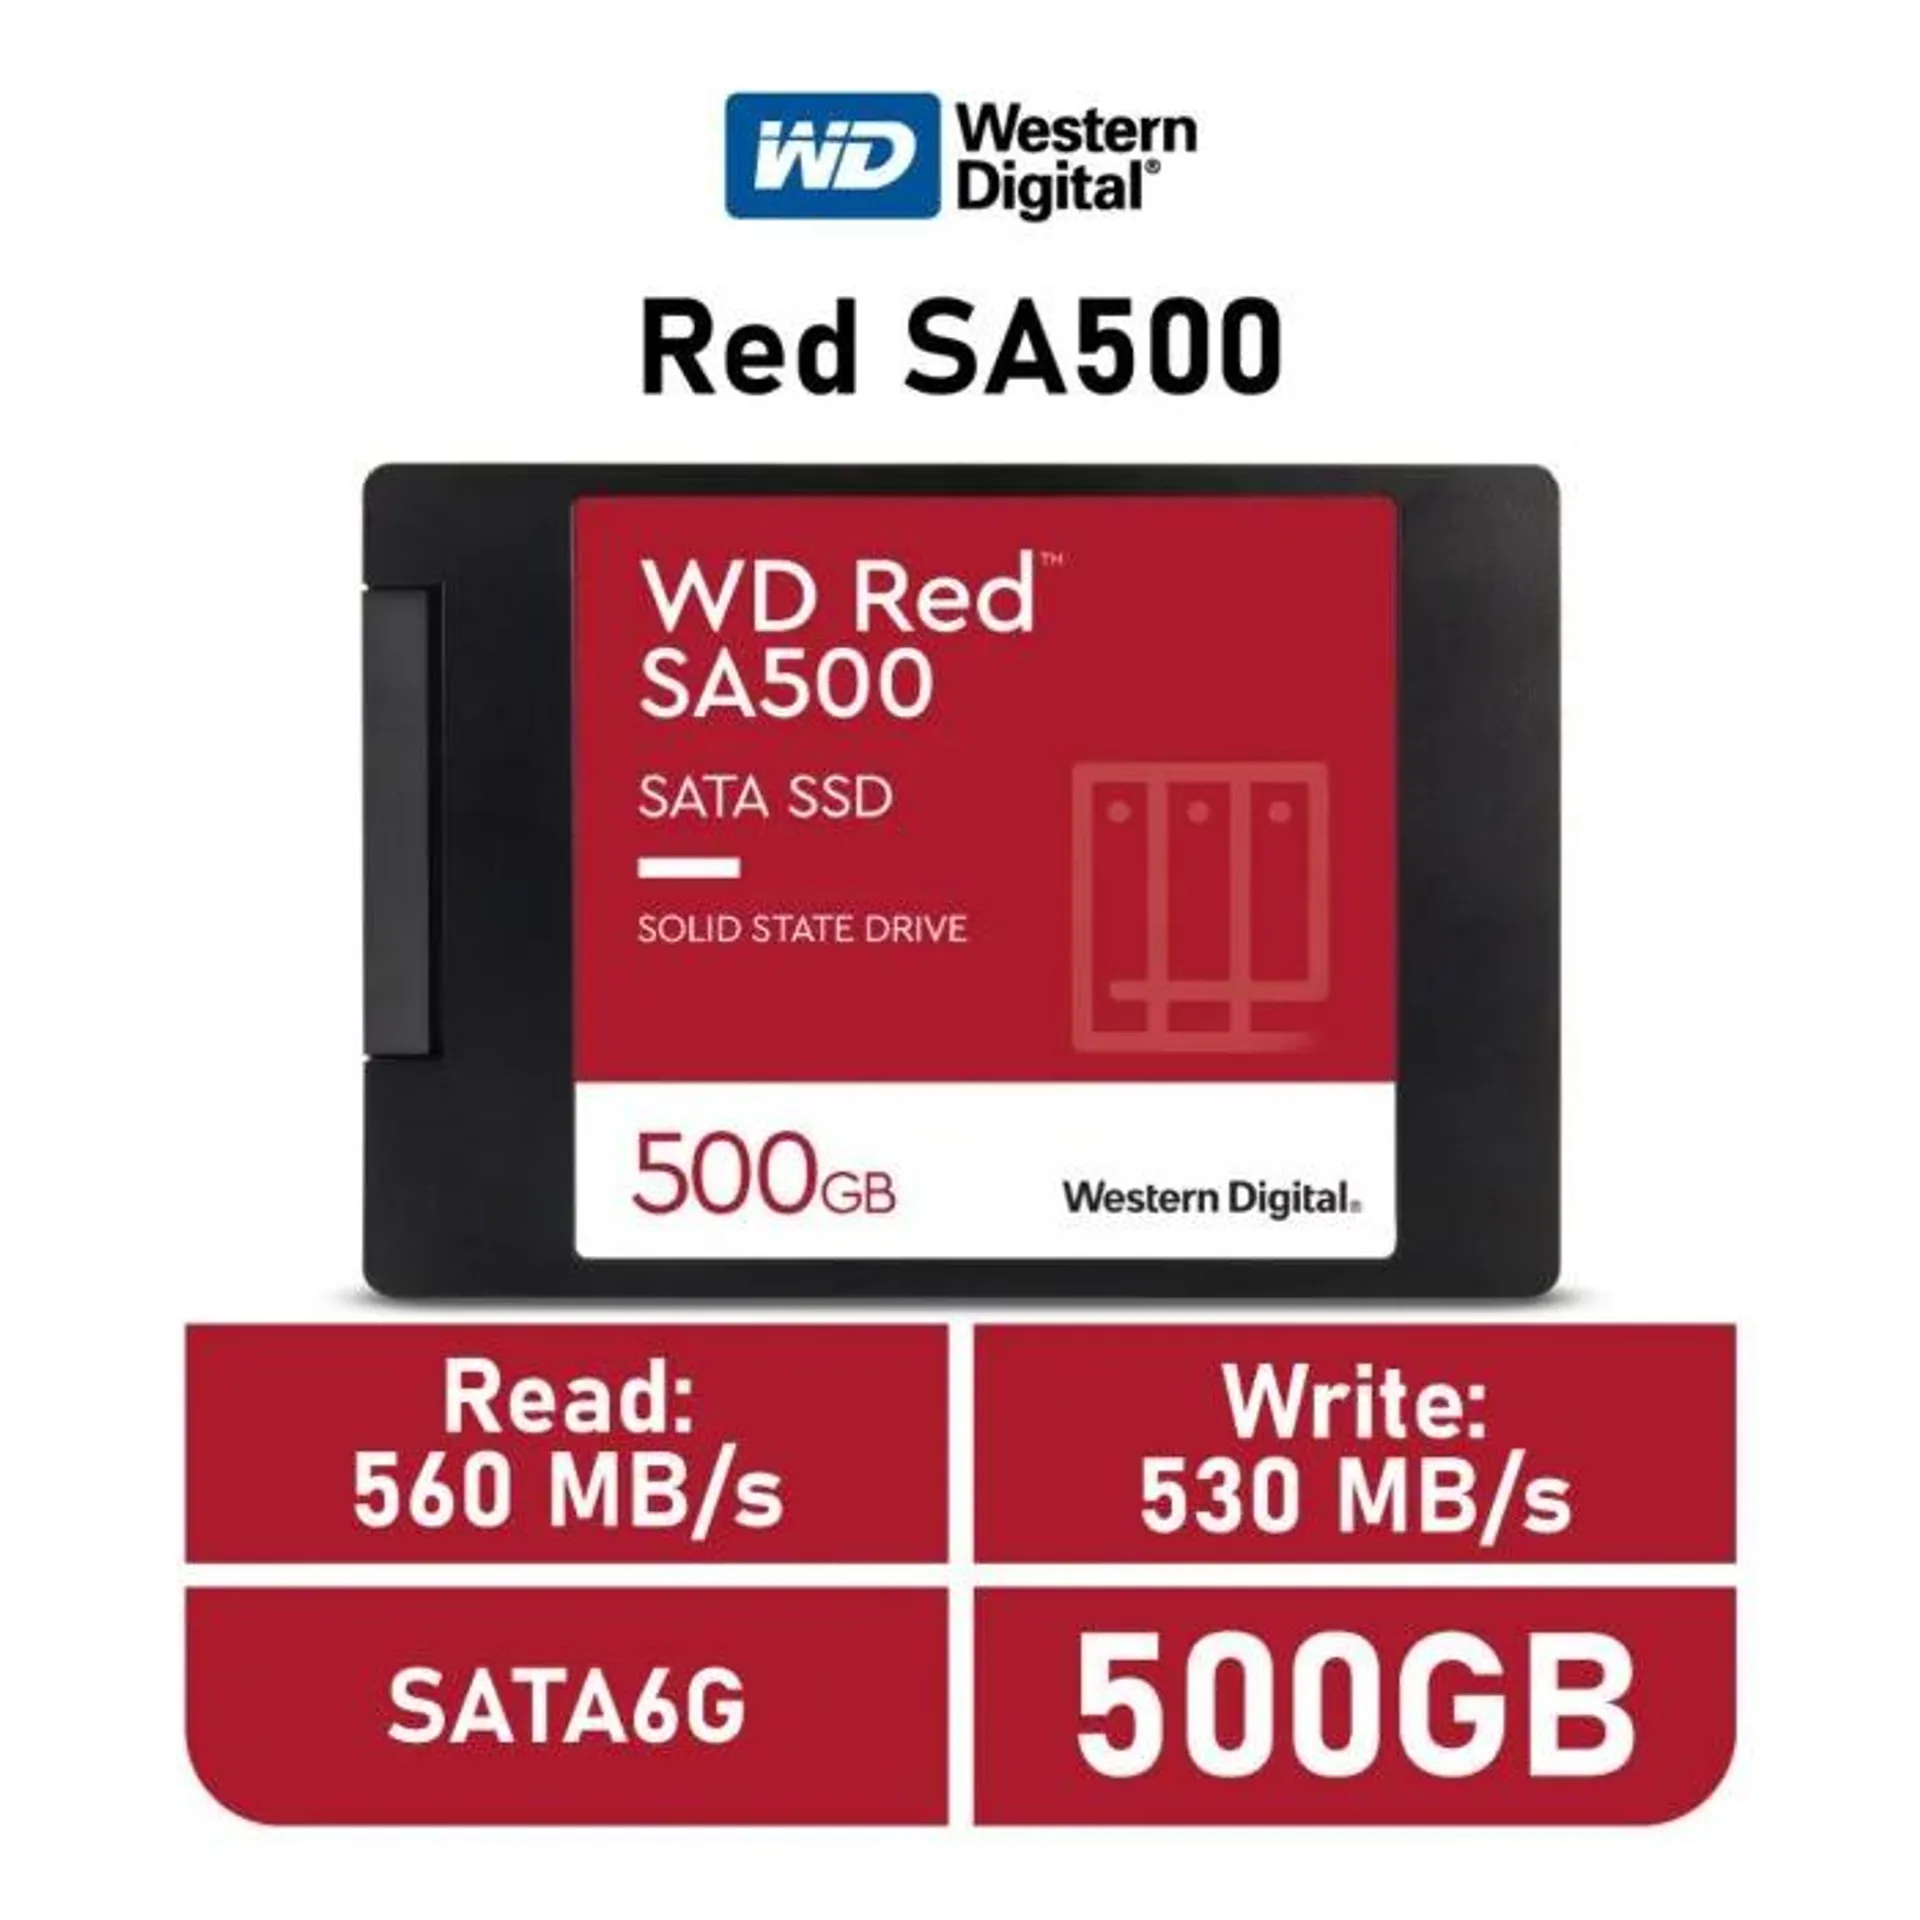 Western Digital Red SA500 500GB SATA6G WDS500G1R0A 2.5" Solid State Drive